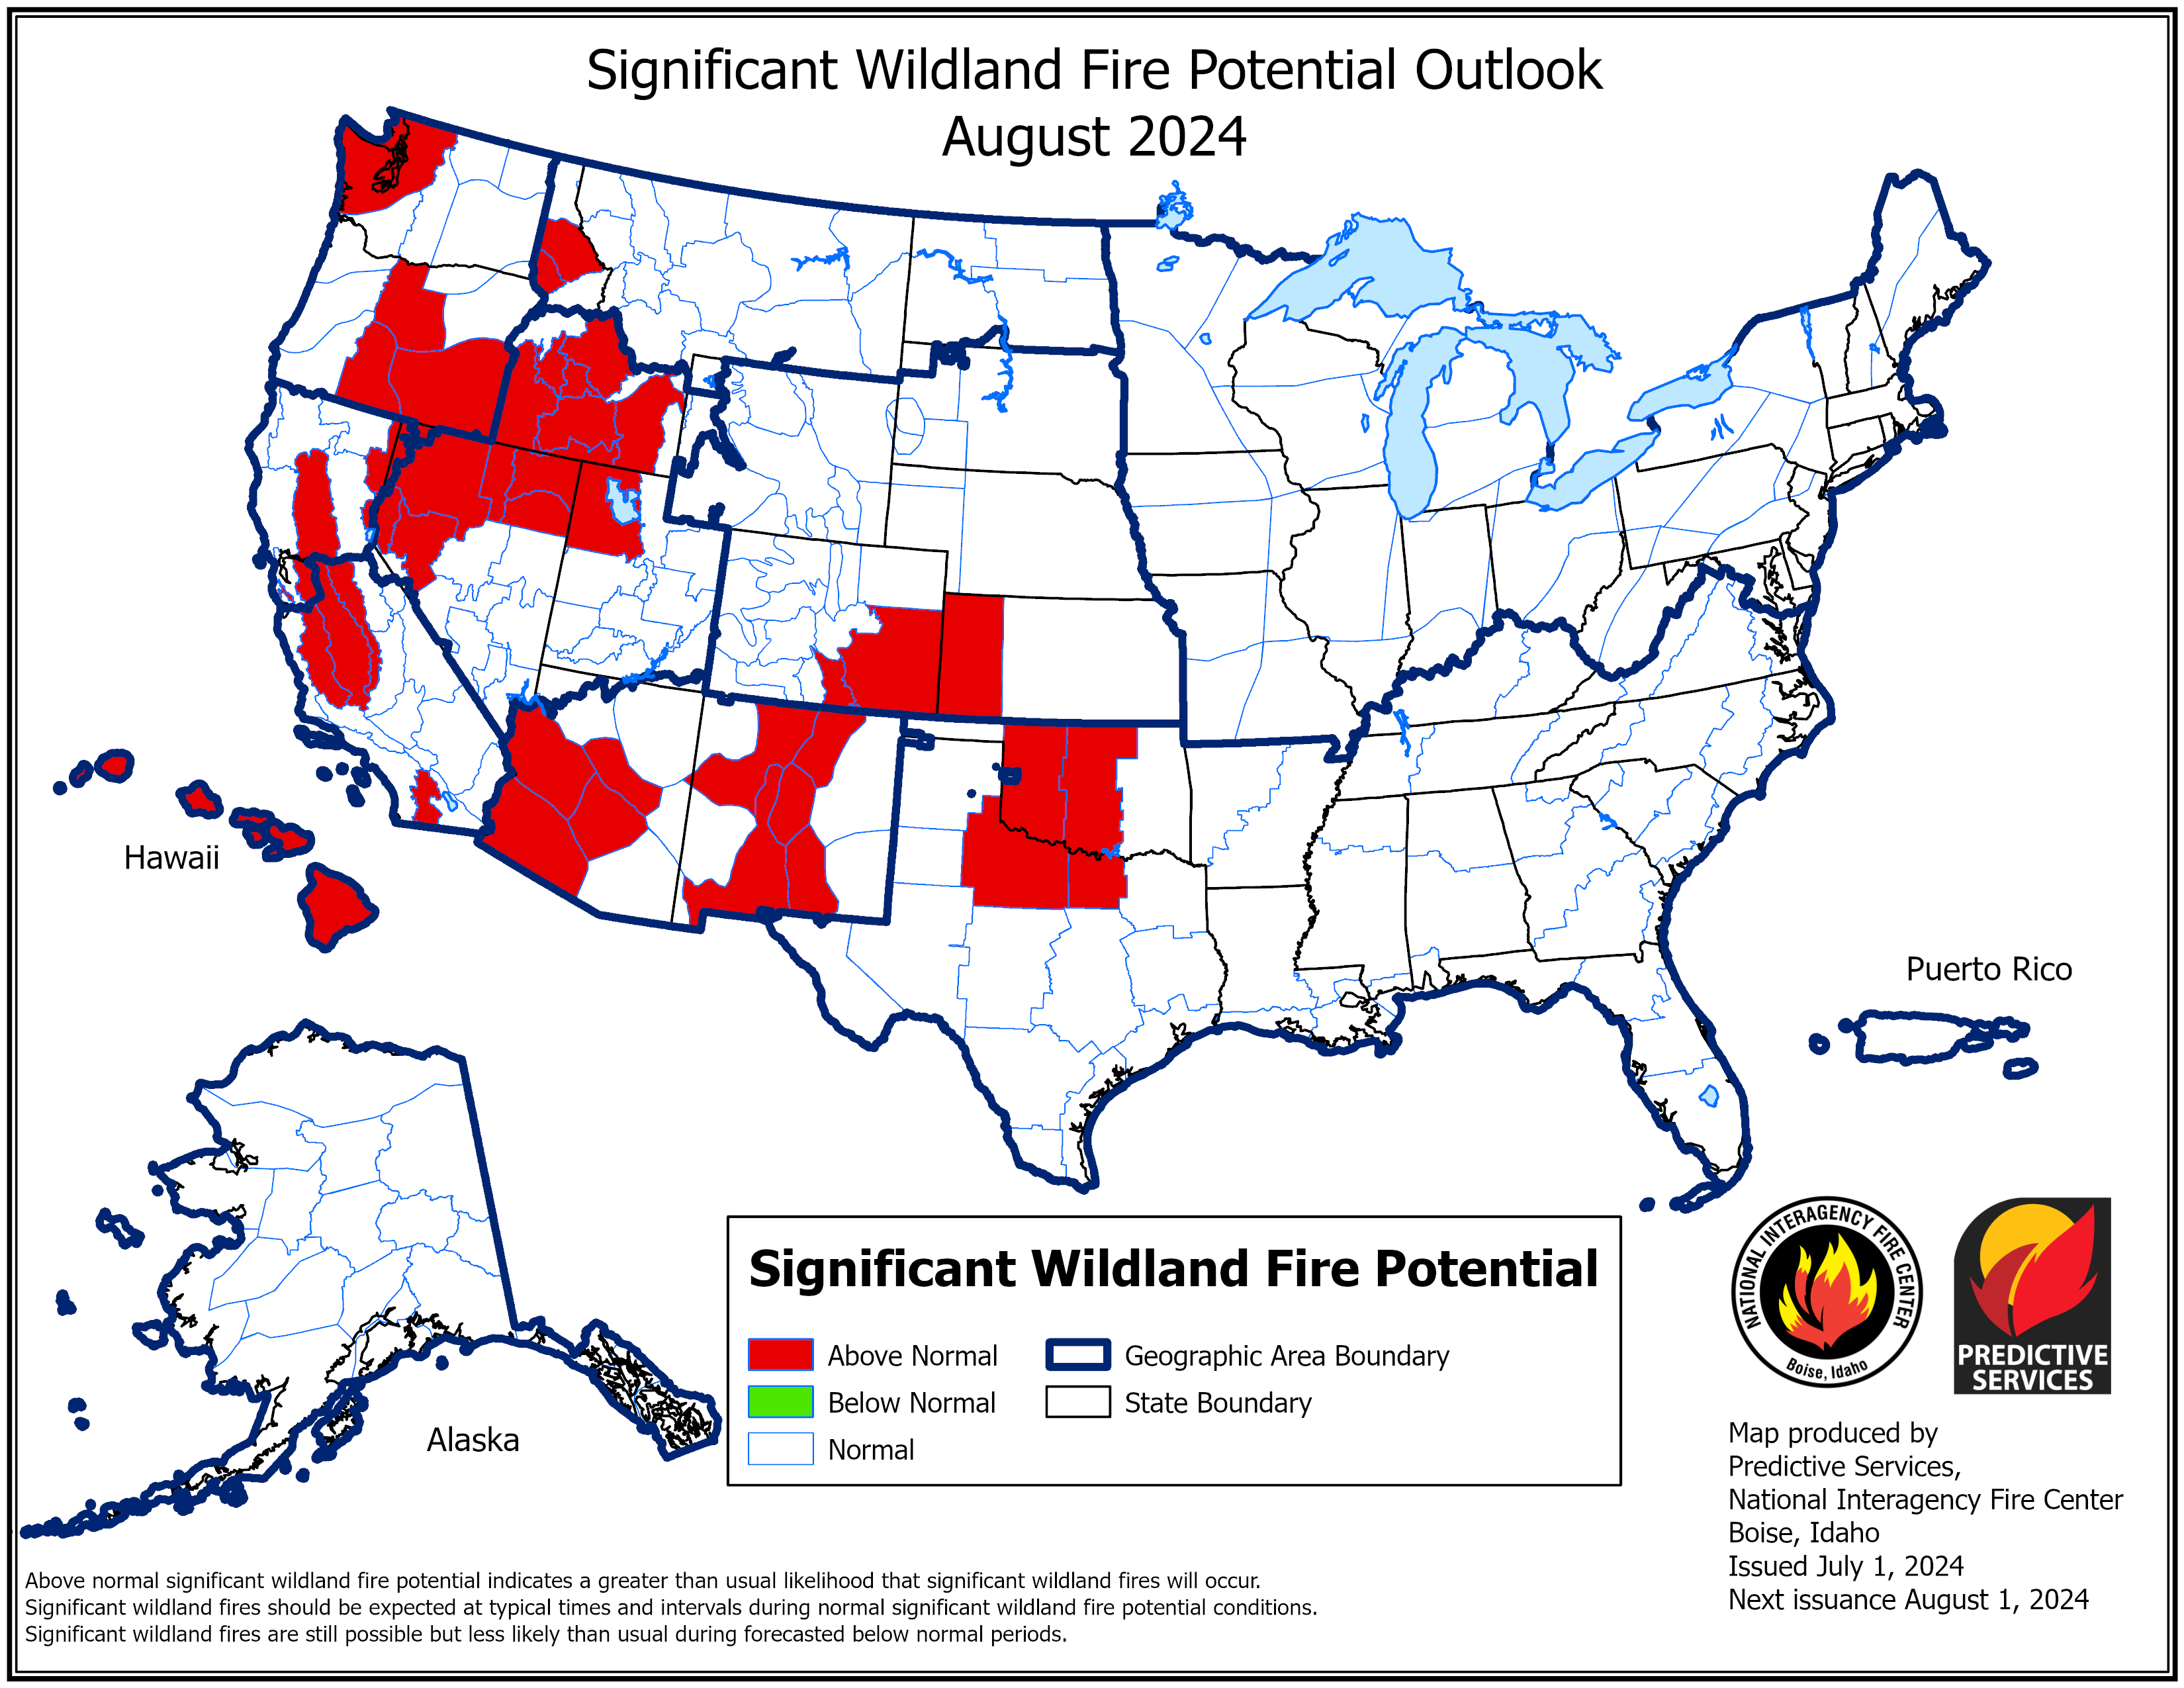  Month 2 Wildland Fire Outlook 